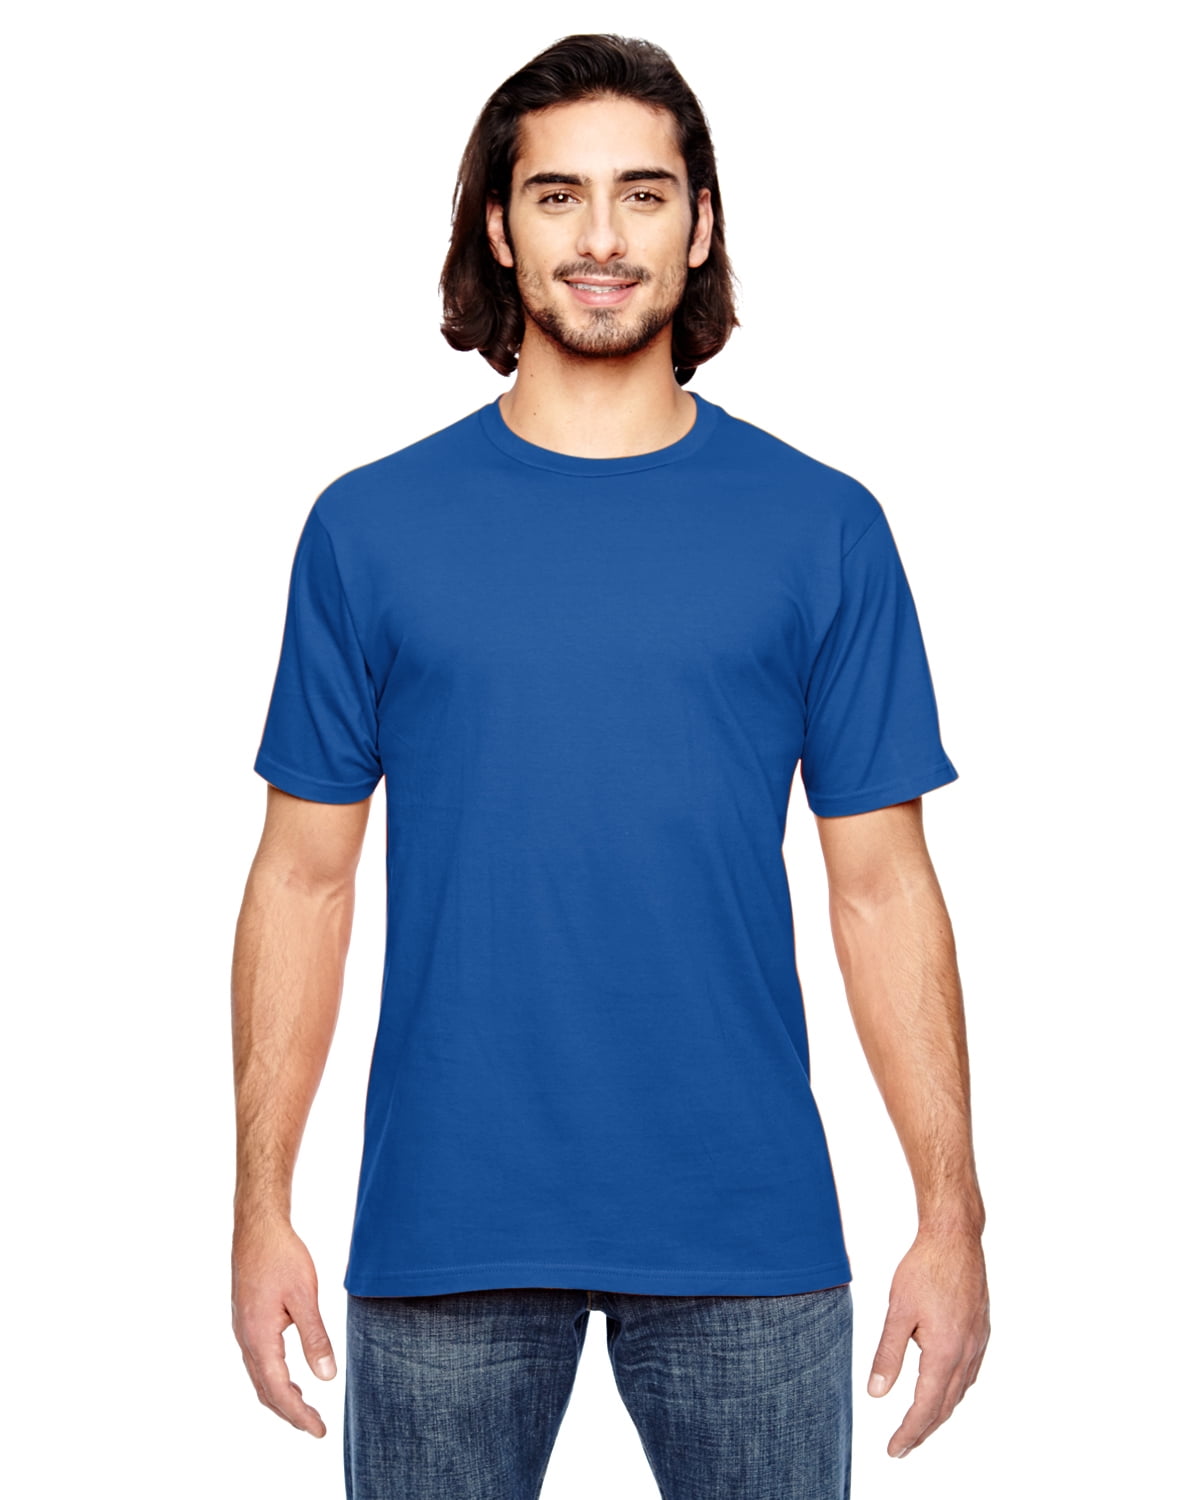 Anvil - The Anvil Lightweight T-Shirt - NEON BLUE - S - Walmart.com ...